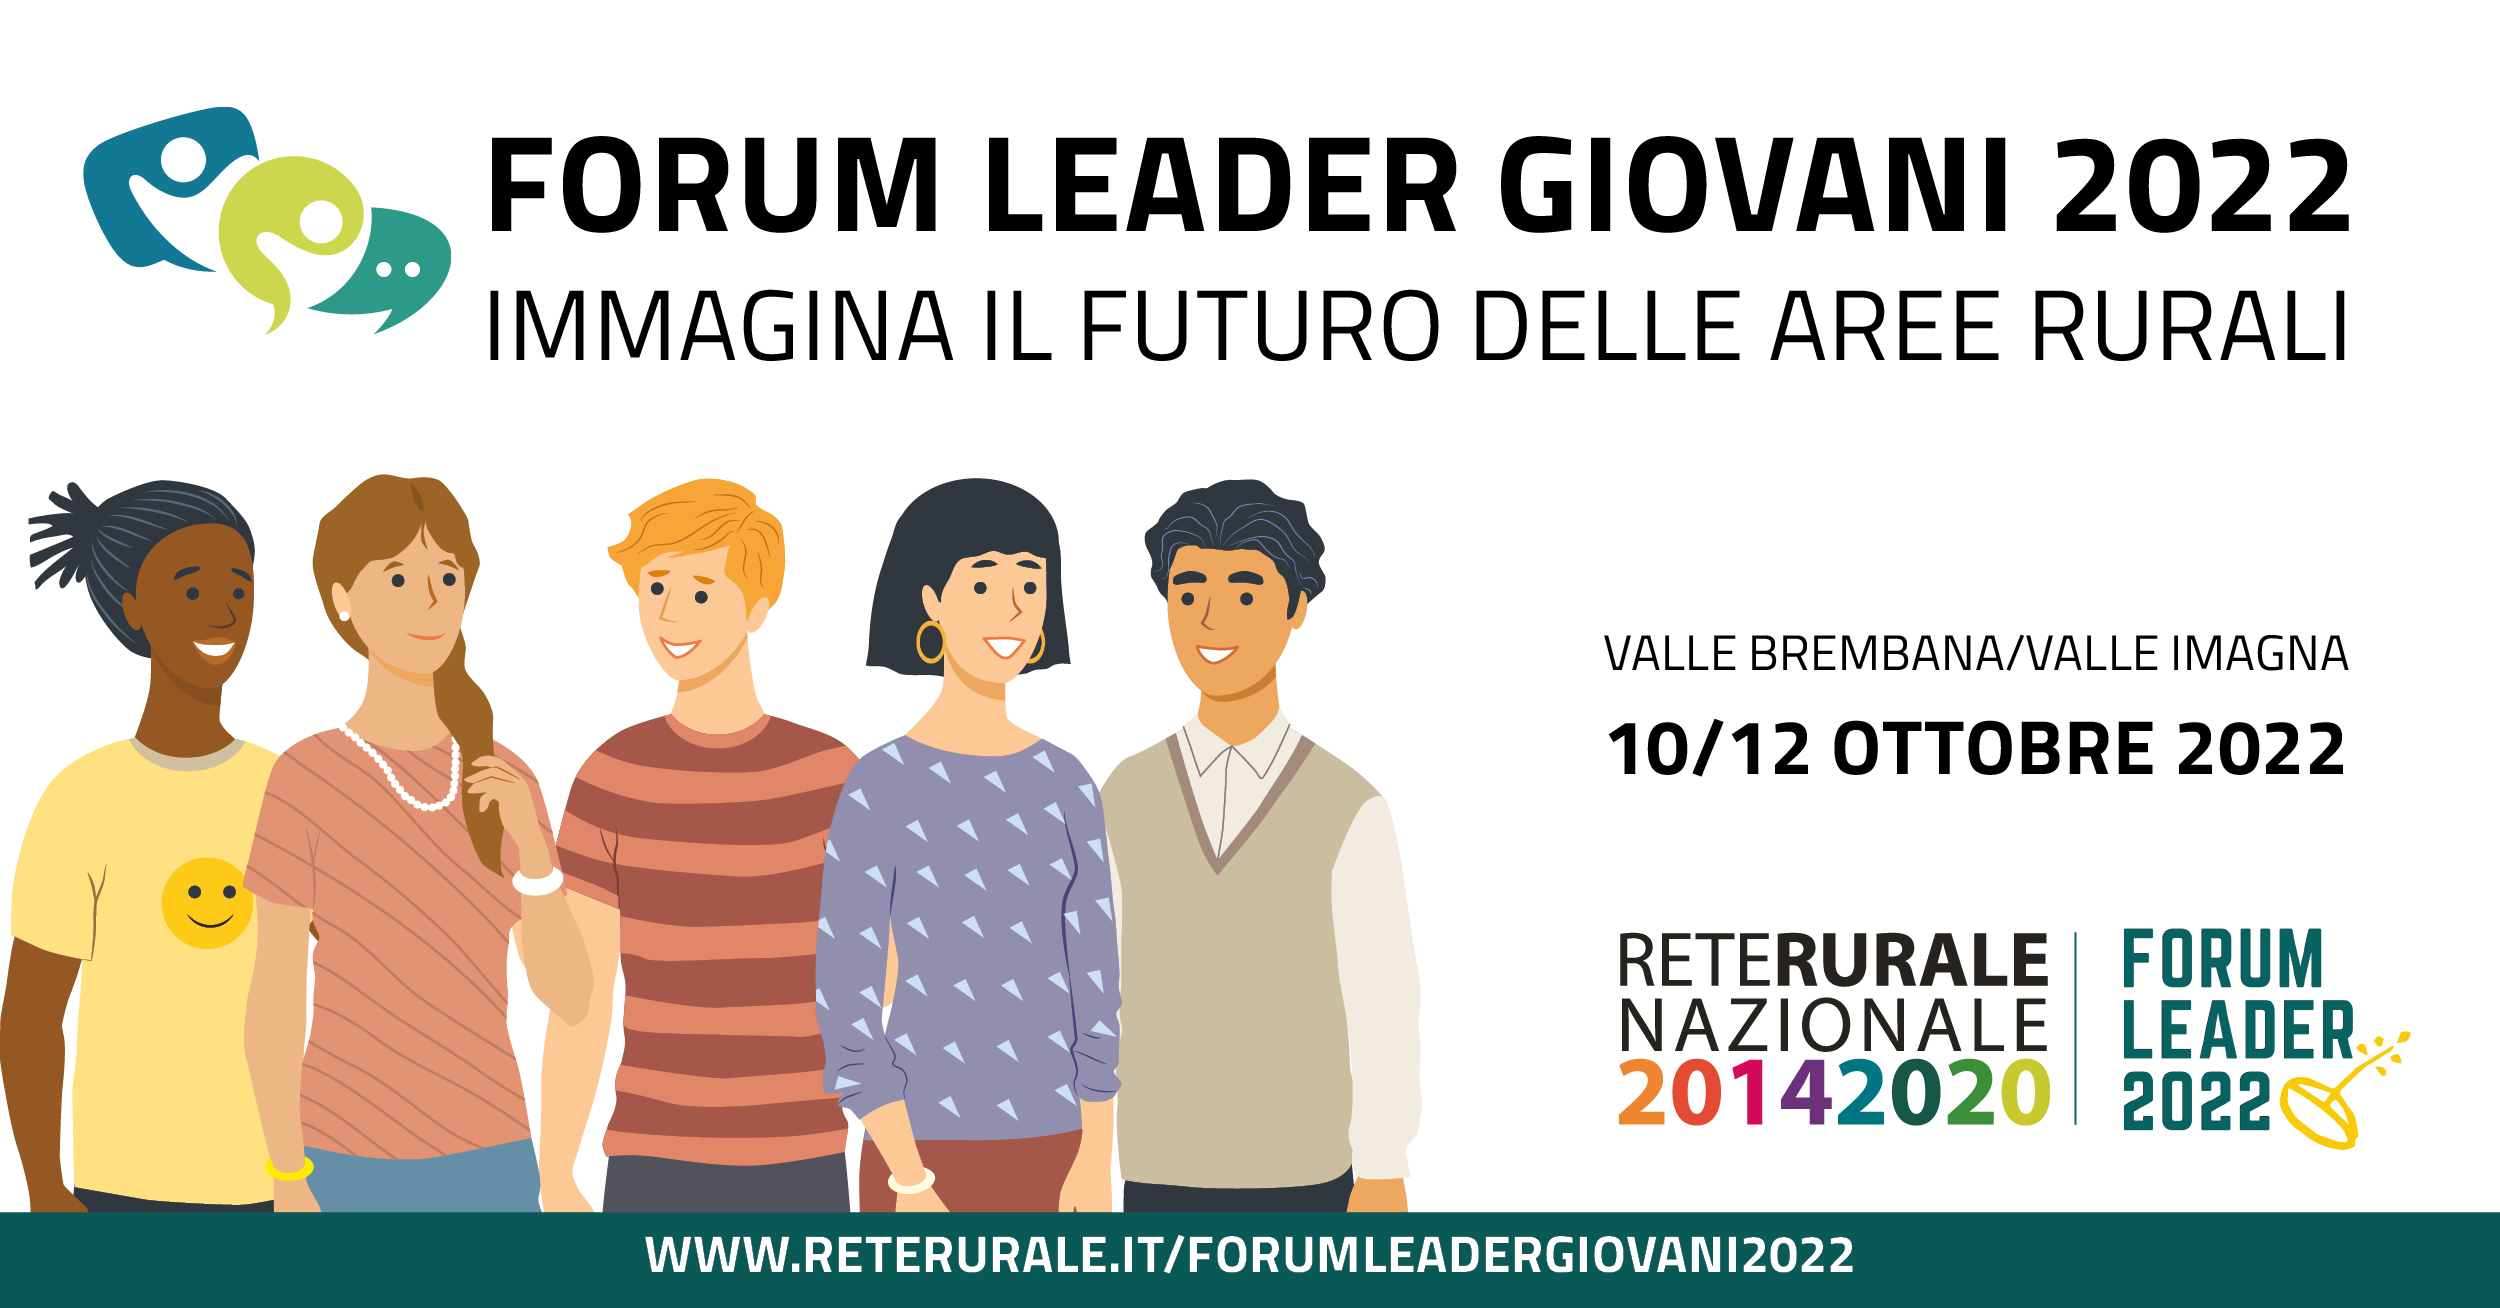 Forum LEADER giovani 2022